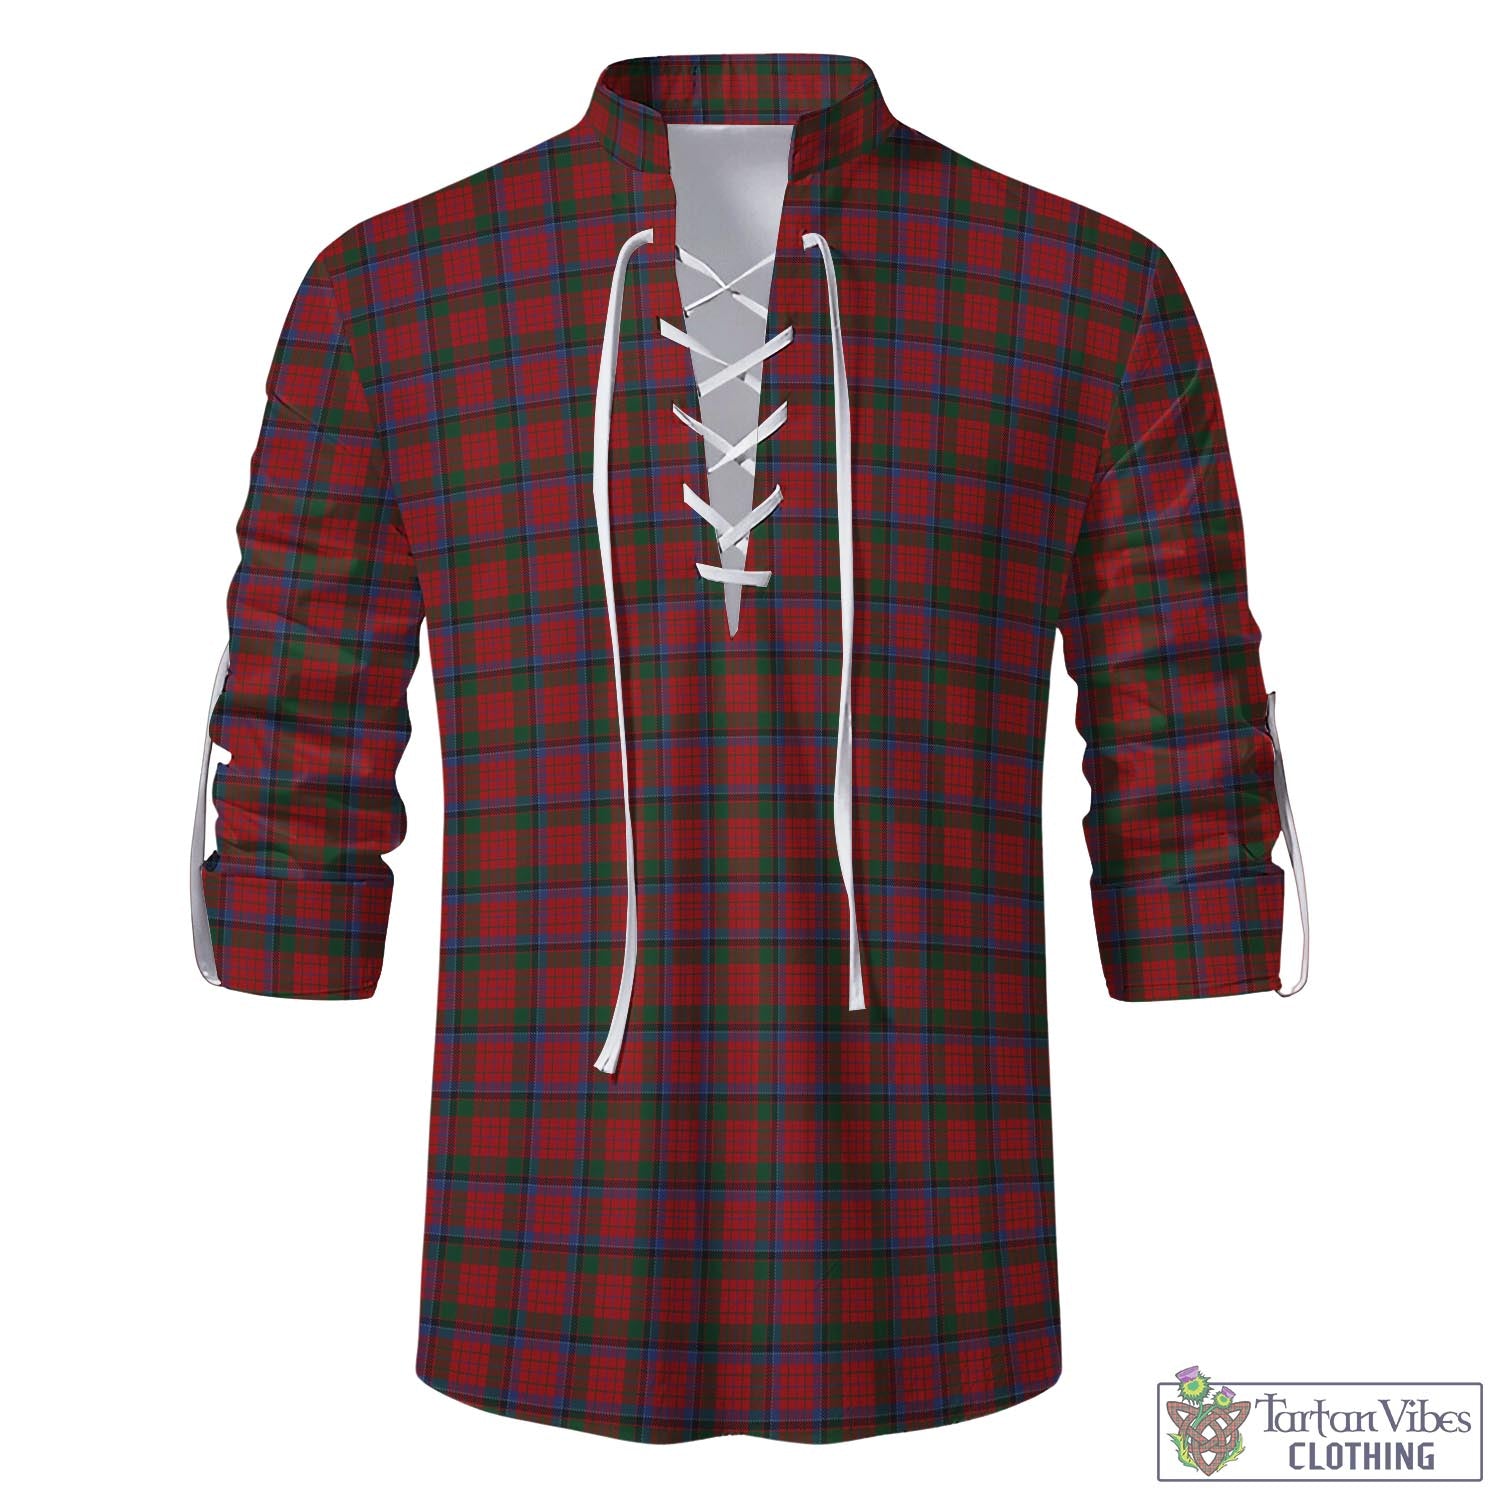 Tartan Vibes Clothing Nicolson Tartan Men's Scottish Traditional Jacobite Ghillie Kilt Shirt